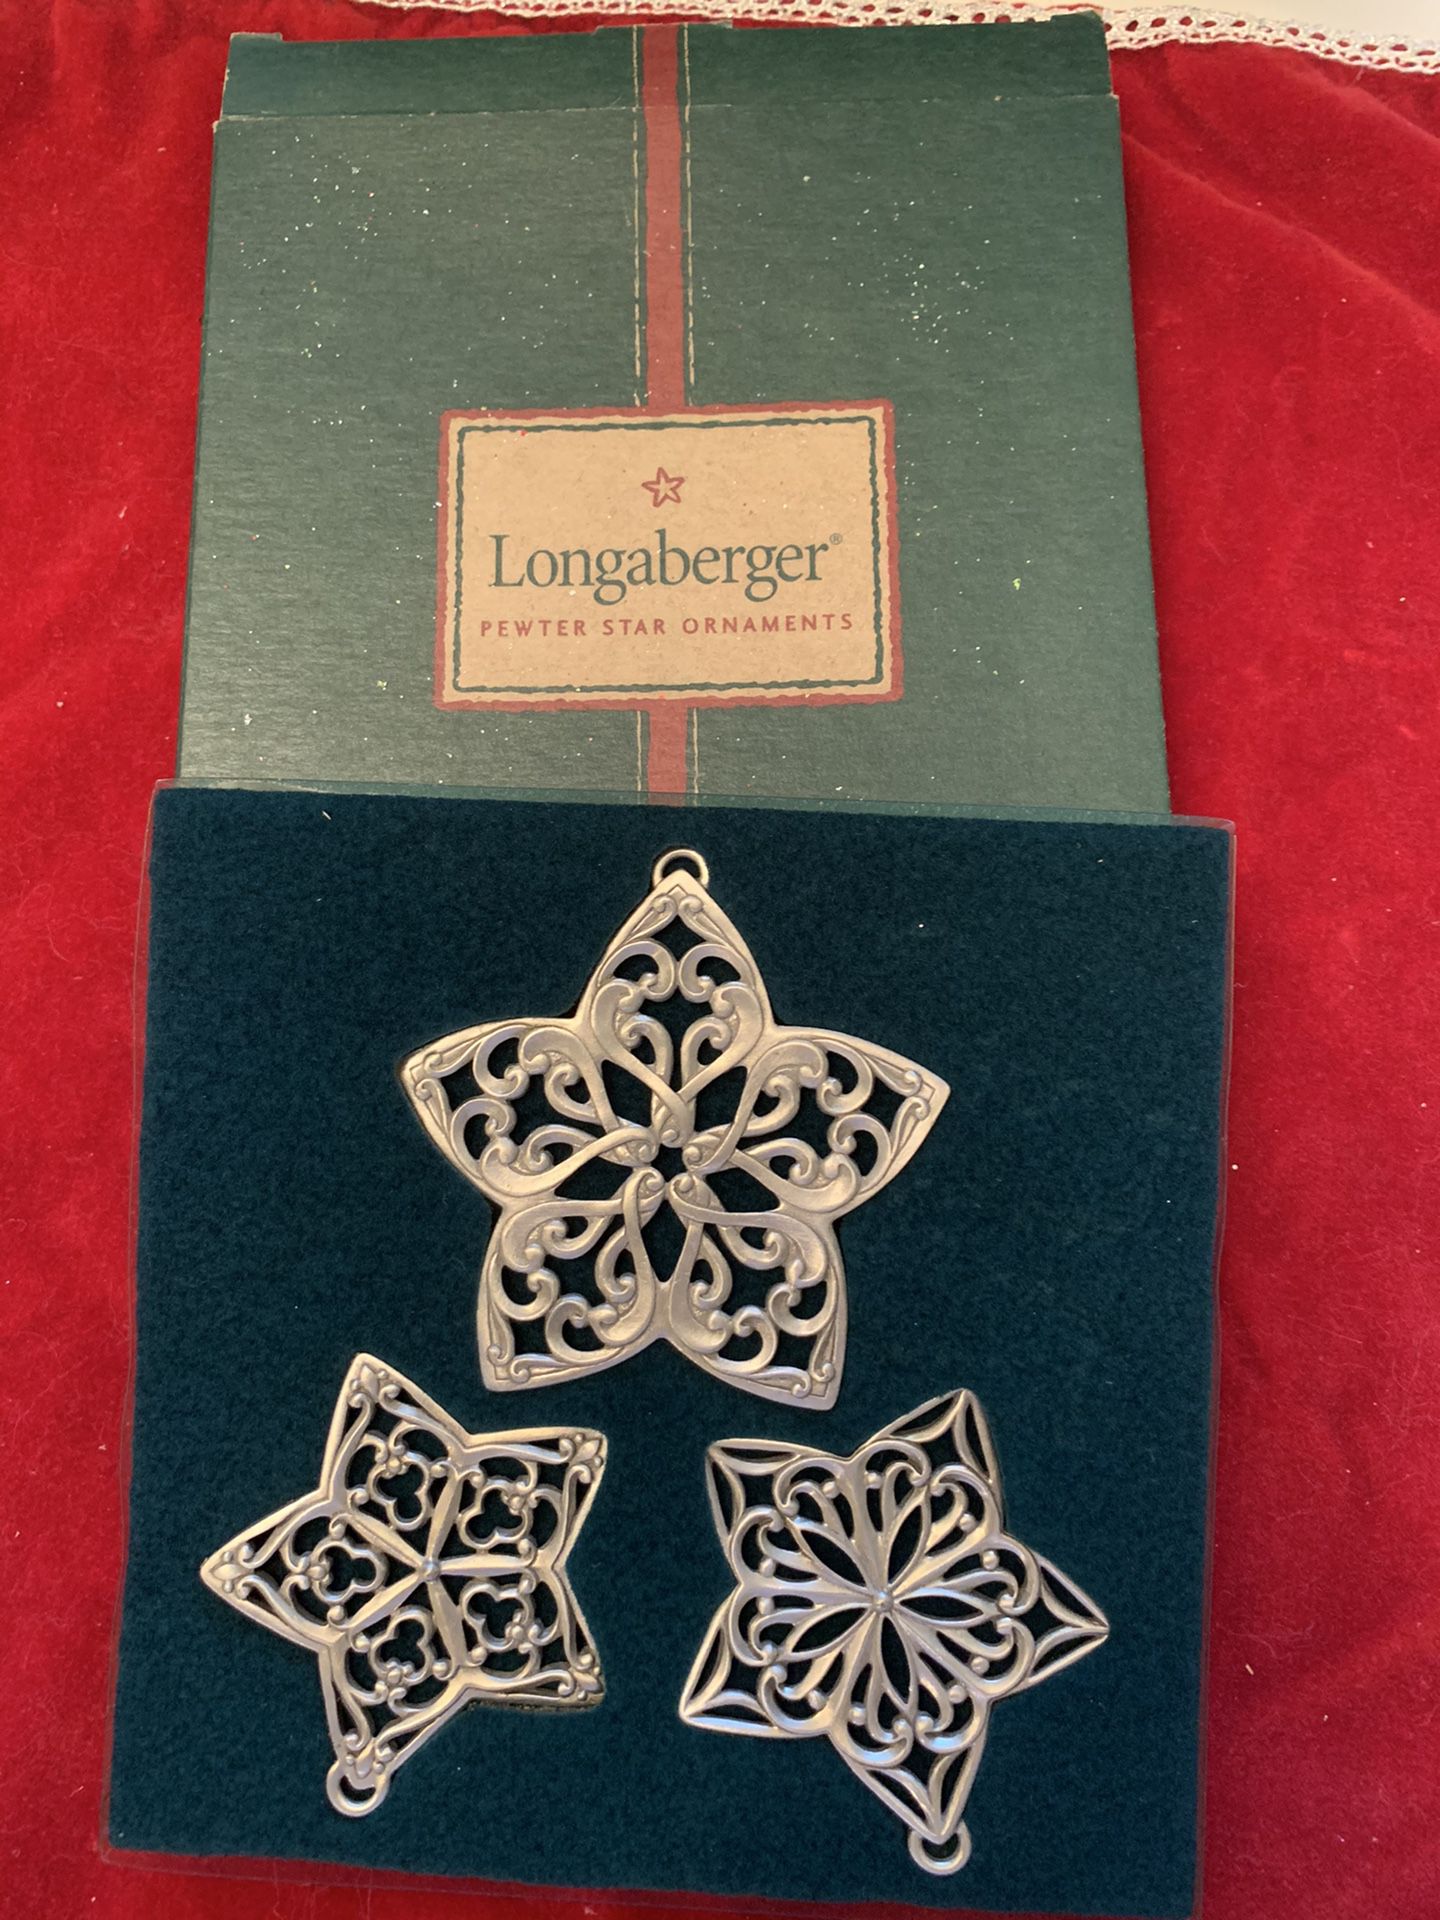 Longaberger star ornaments